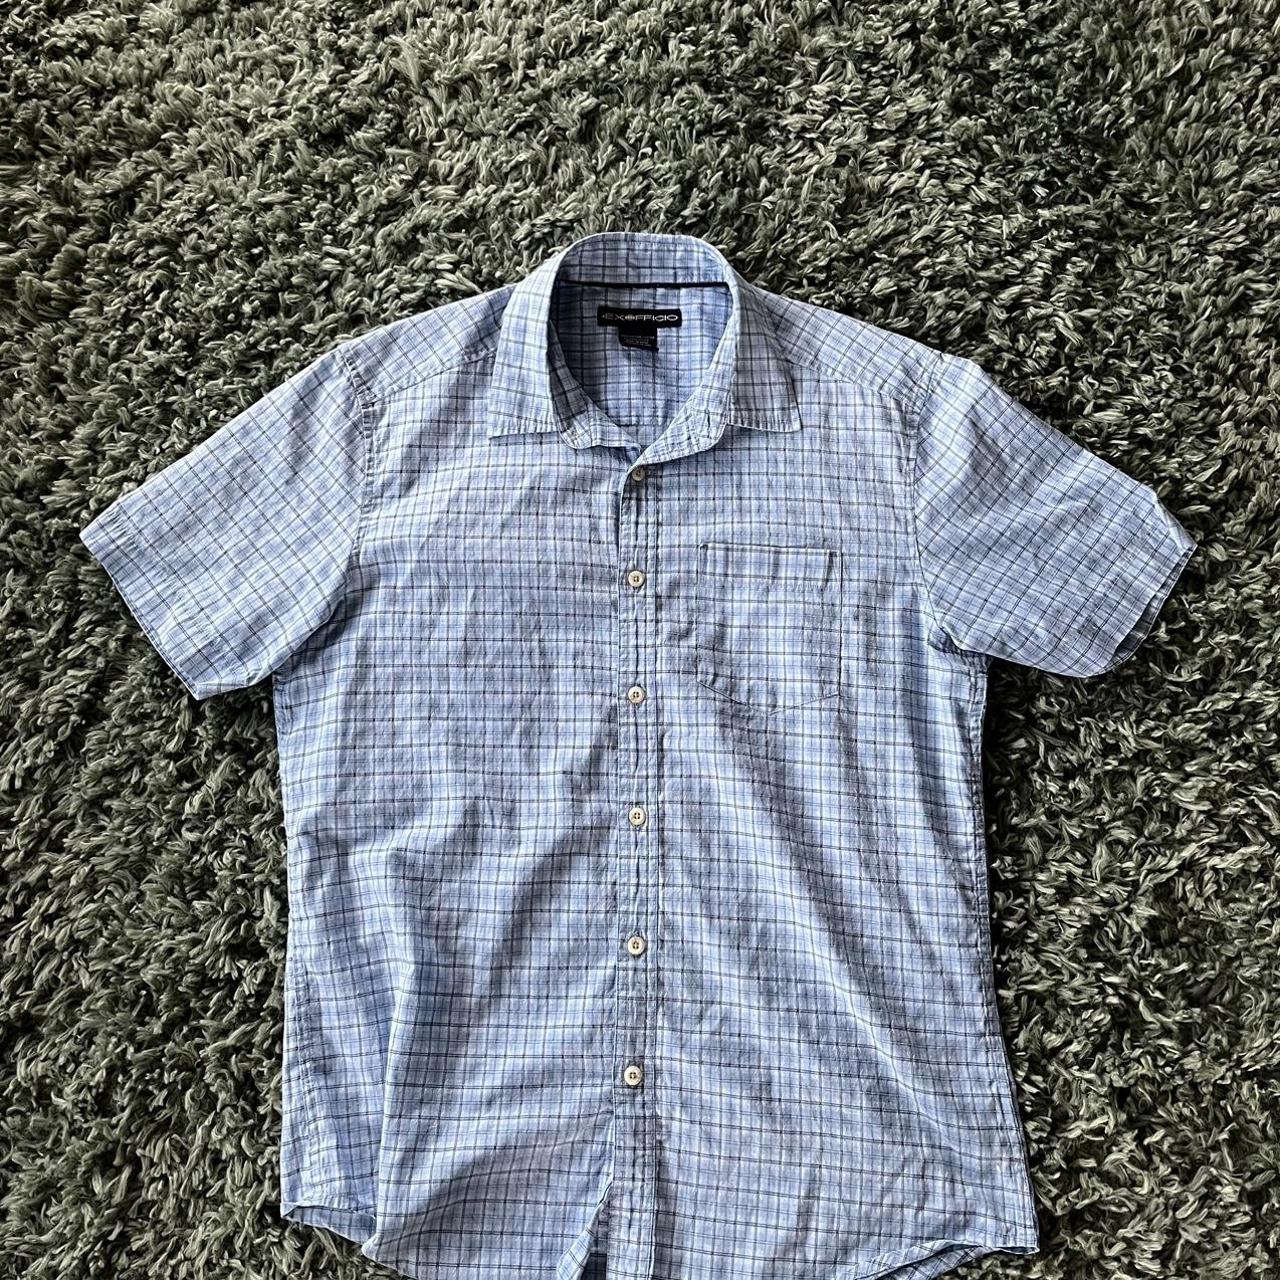 ExOfficio Men's Blue and White Shirt